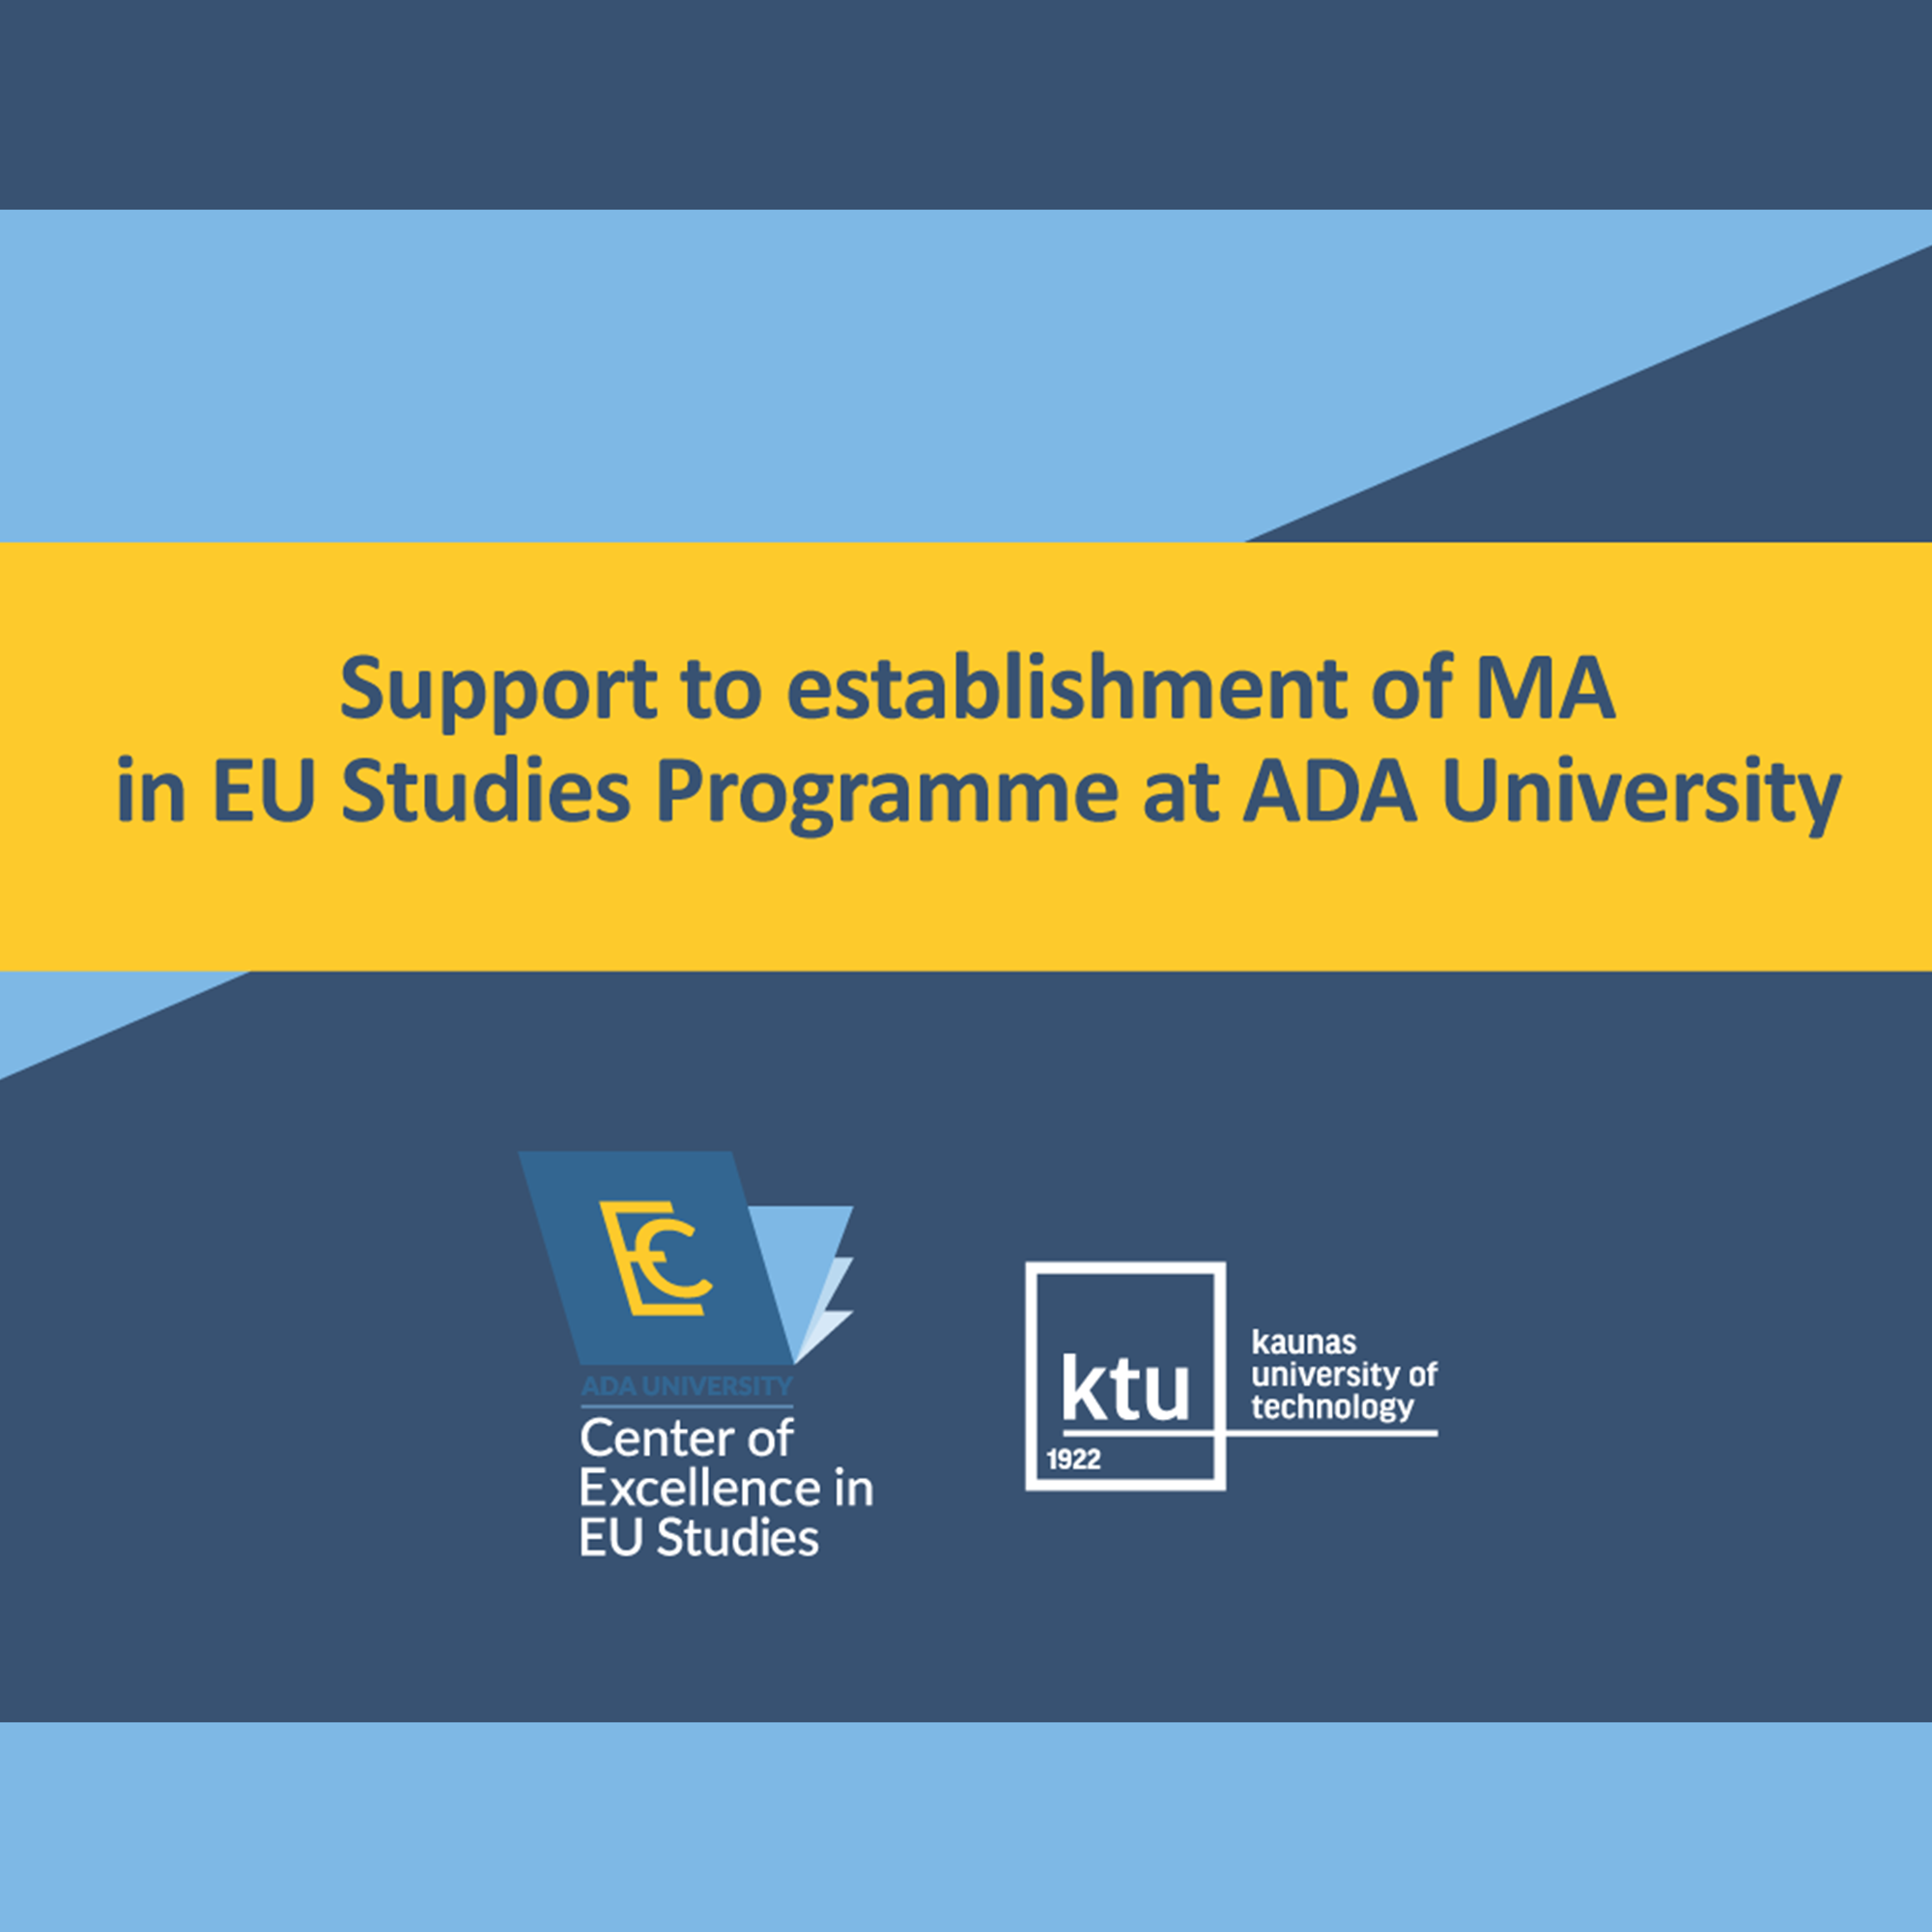 Support to Establishment of MA EU Studies Programme at ADA University